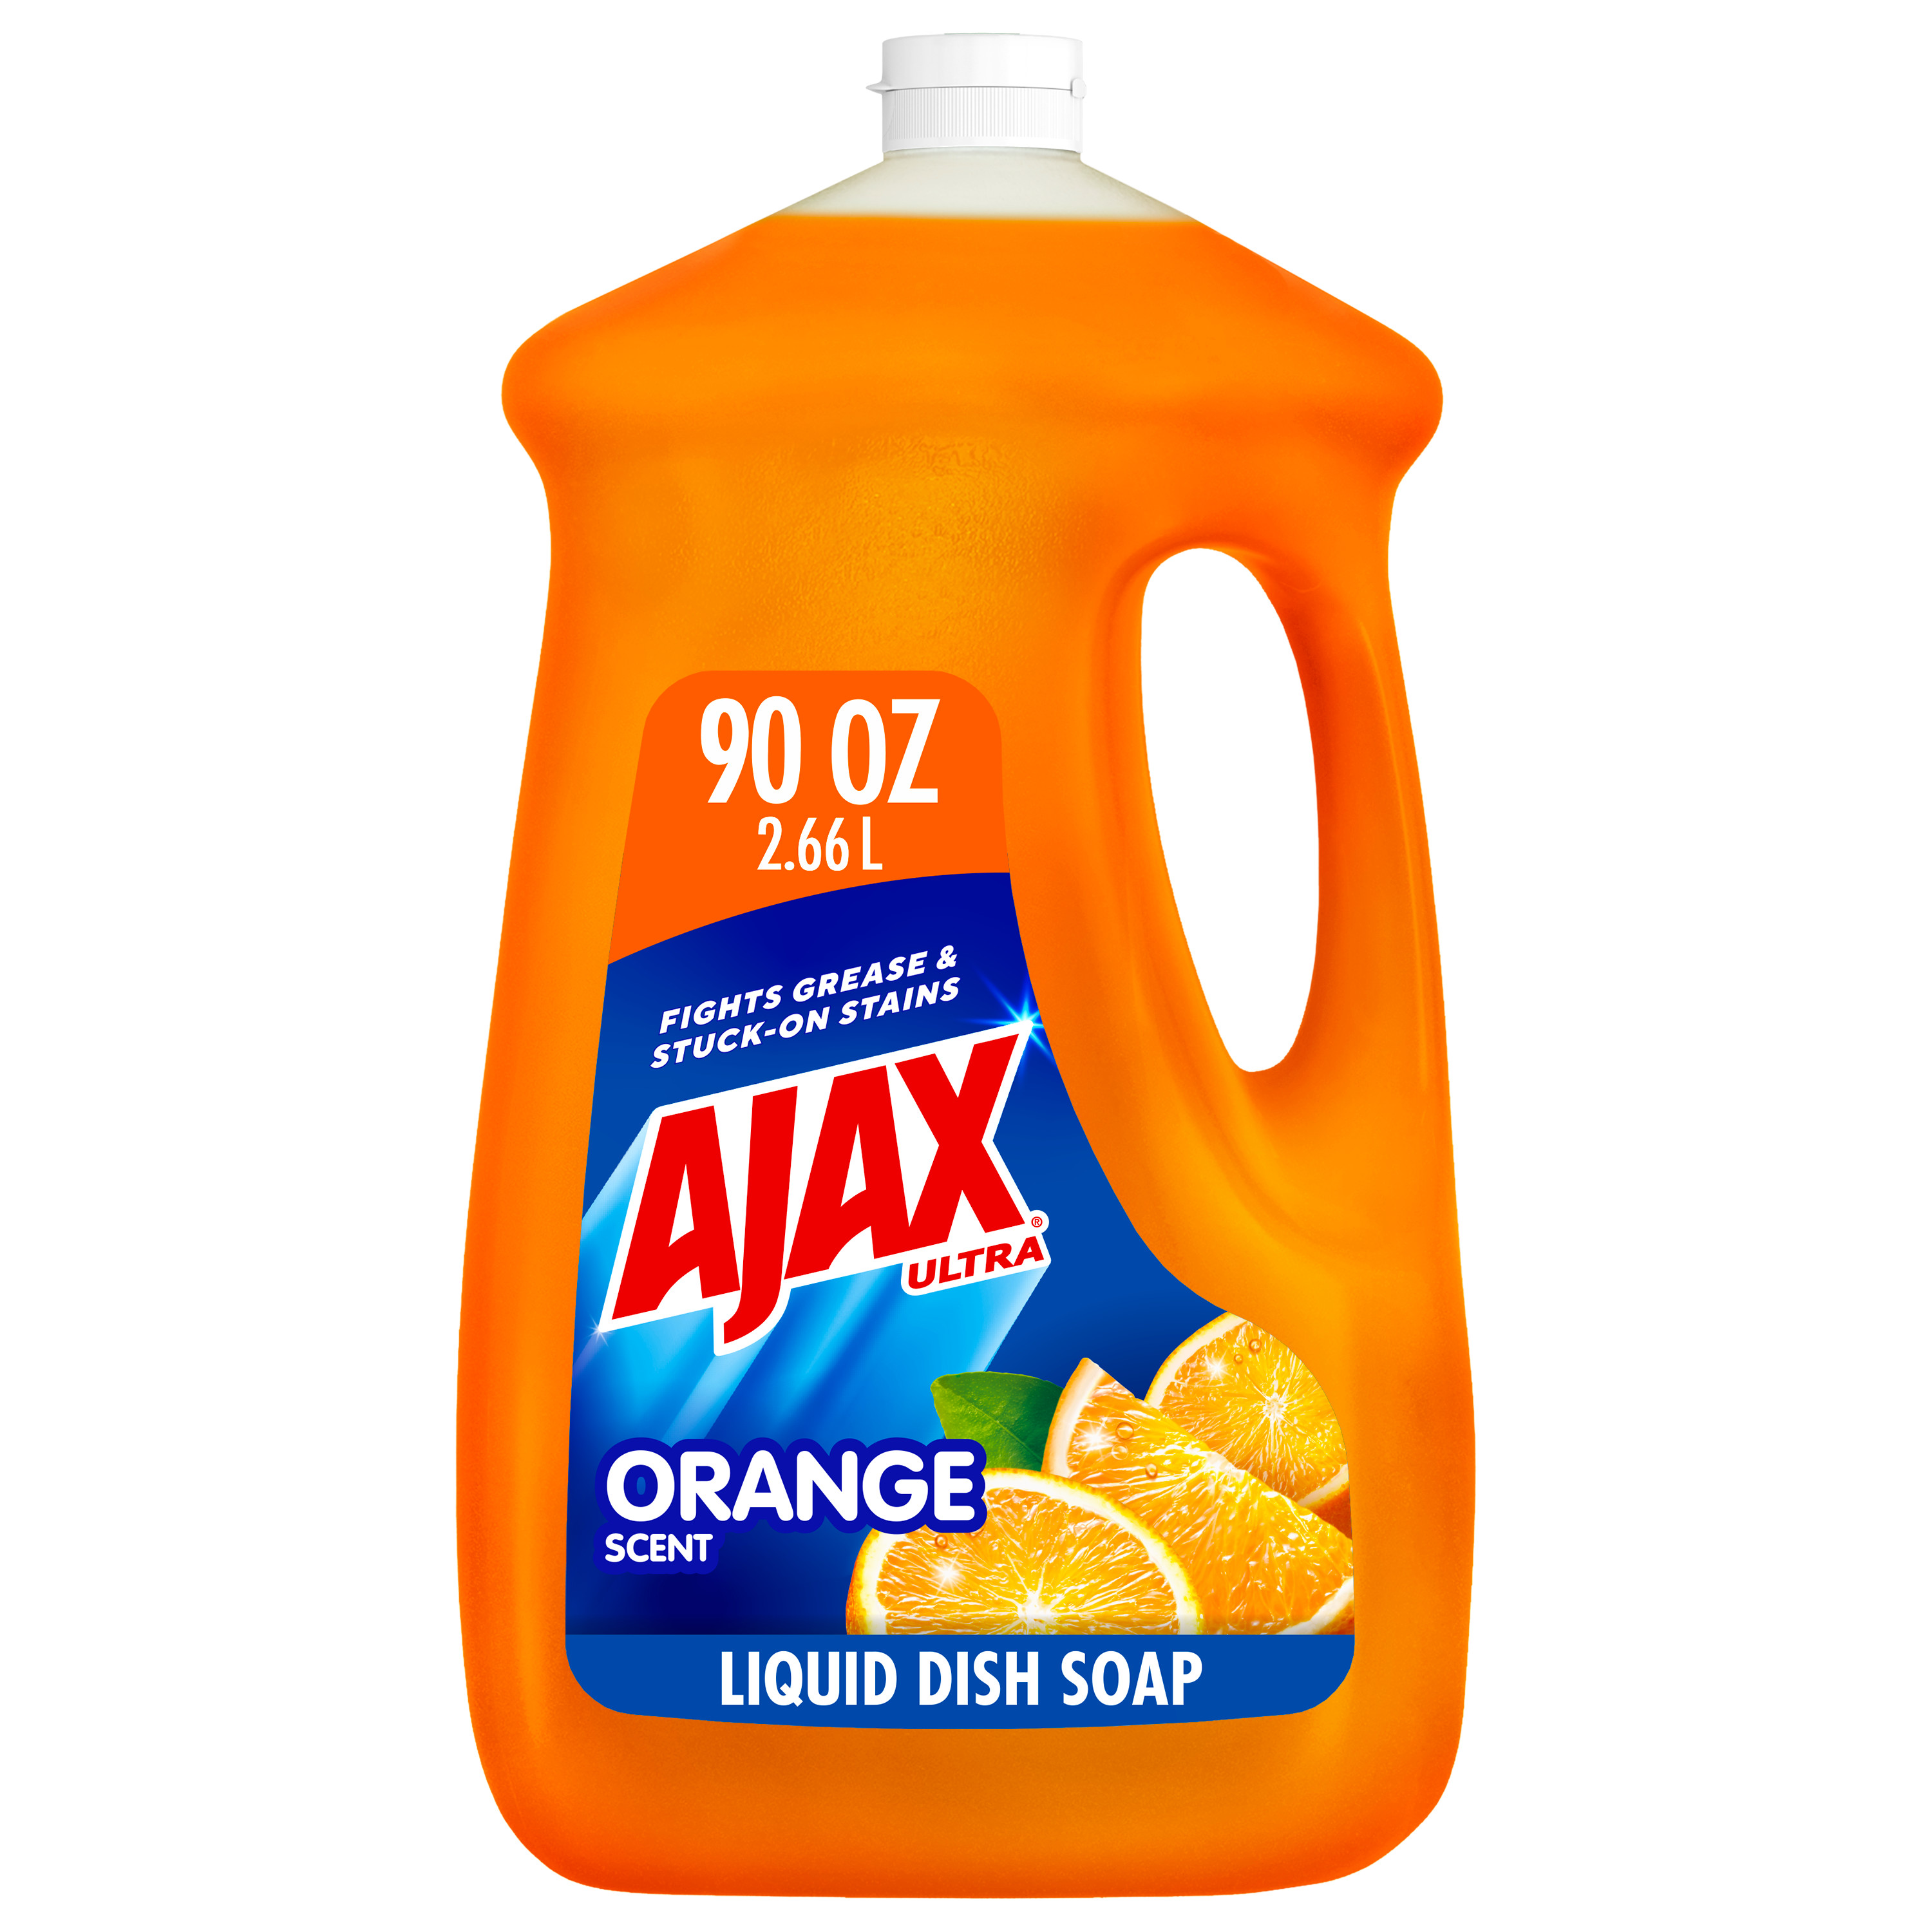 Ajax Ultra Liquid Dish Soap Orange Scent, Triple Action, 90 oz Bottle - image 1 of 16